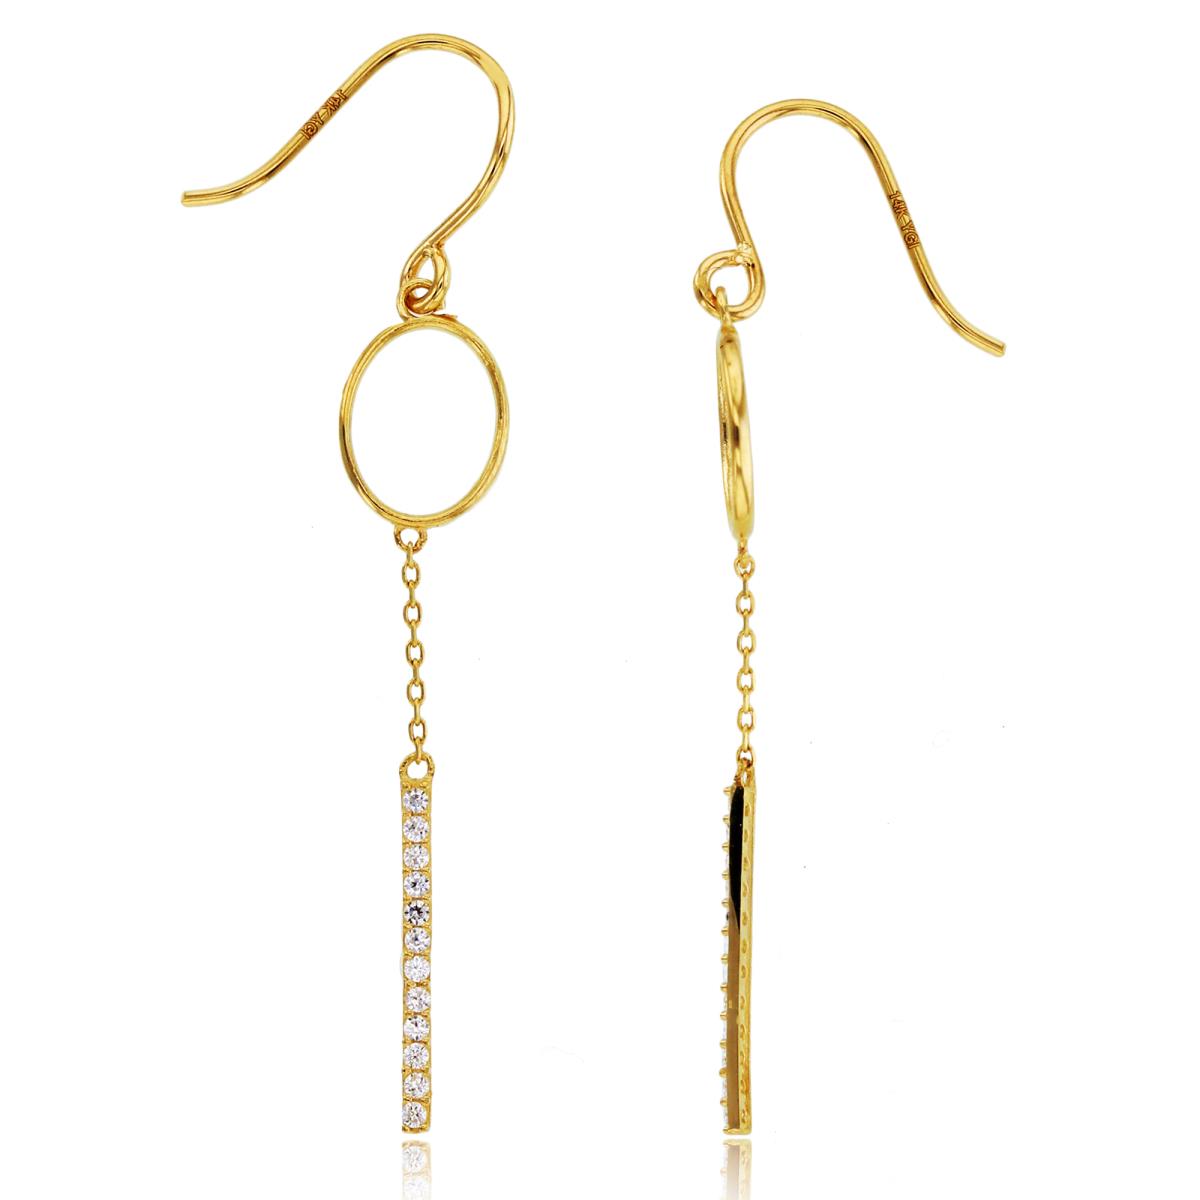 10K Yellow Gold Open Oval & Rnd CZ Bar Dangling on Chain Earrings